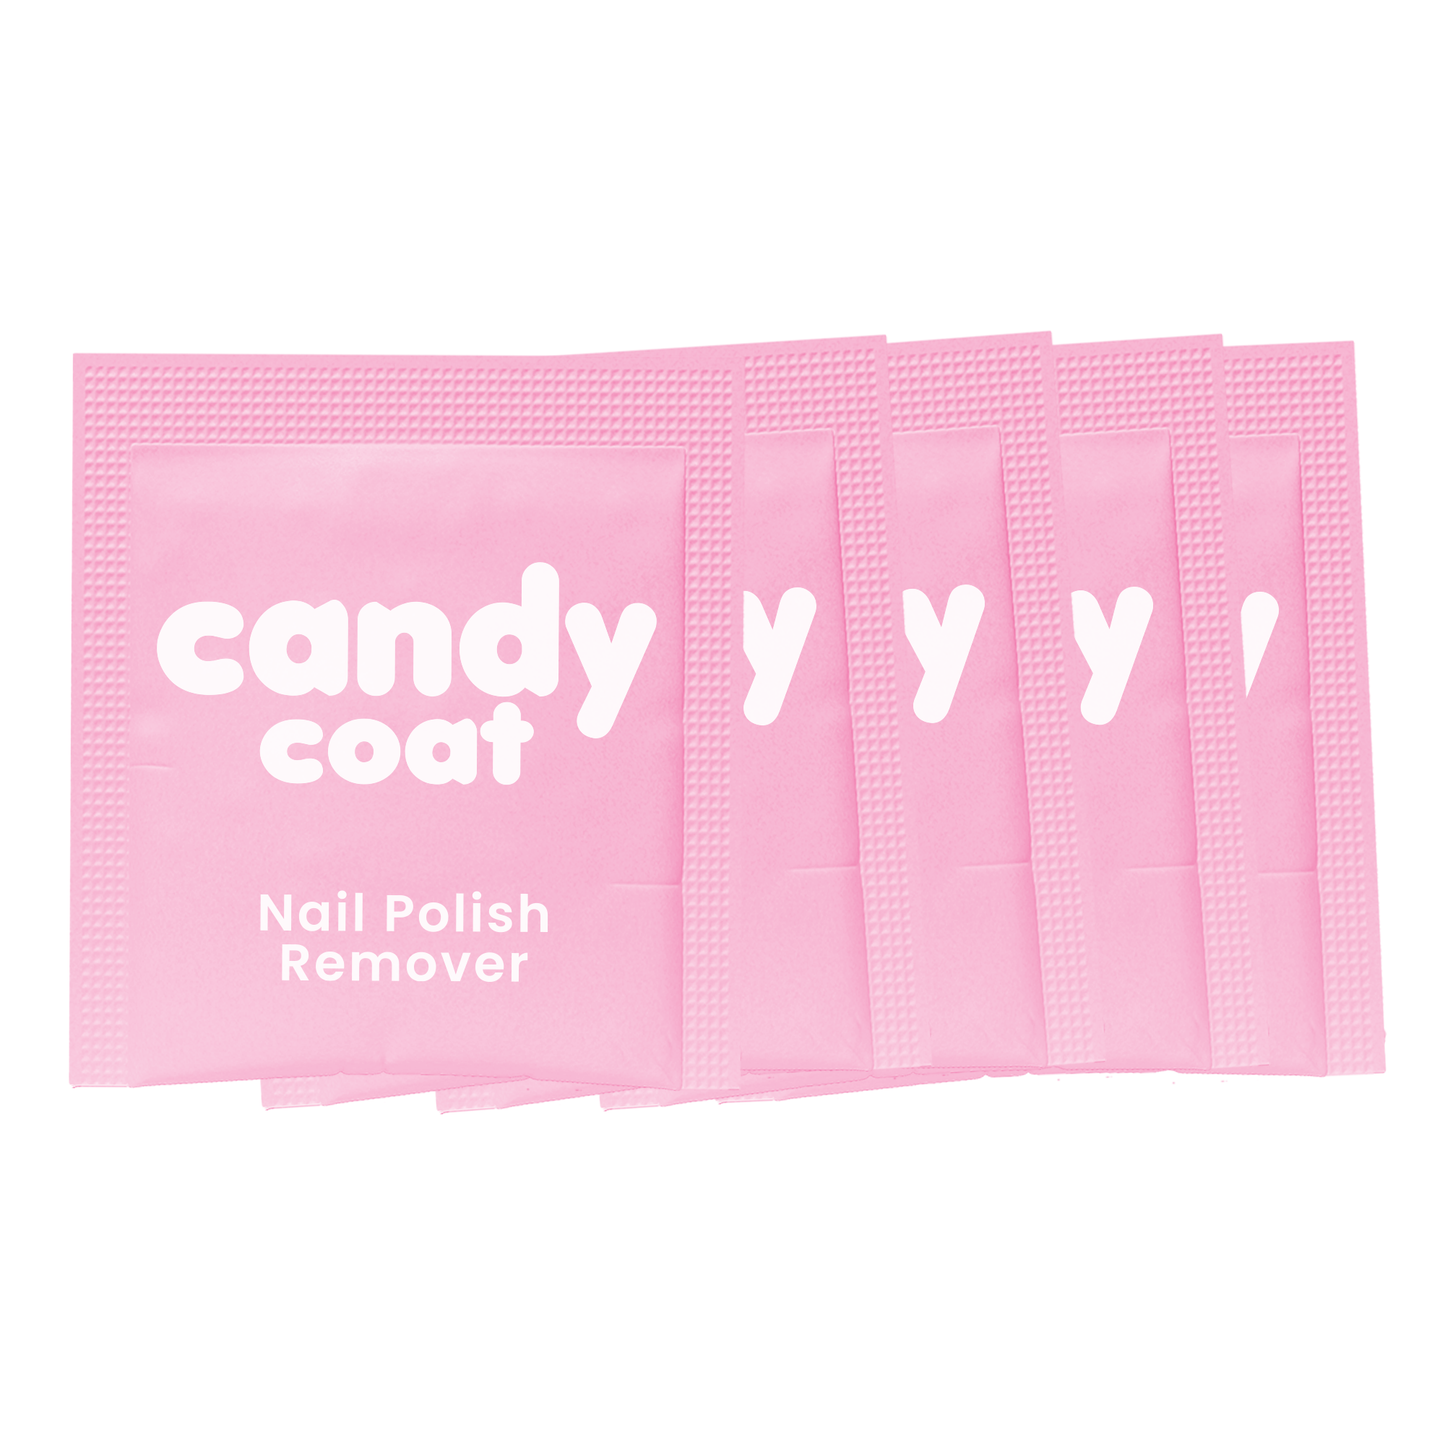 Candy Coat - Nail Polish Remover Wipes